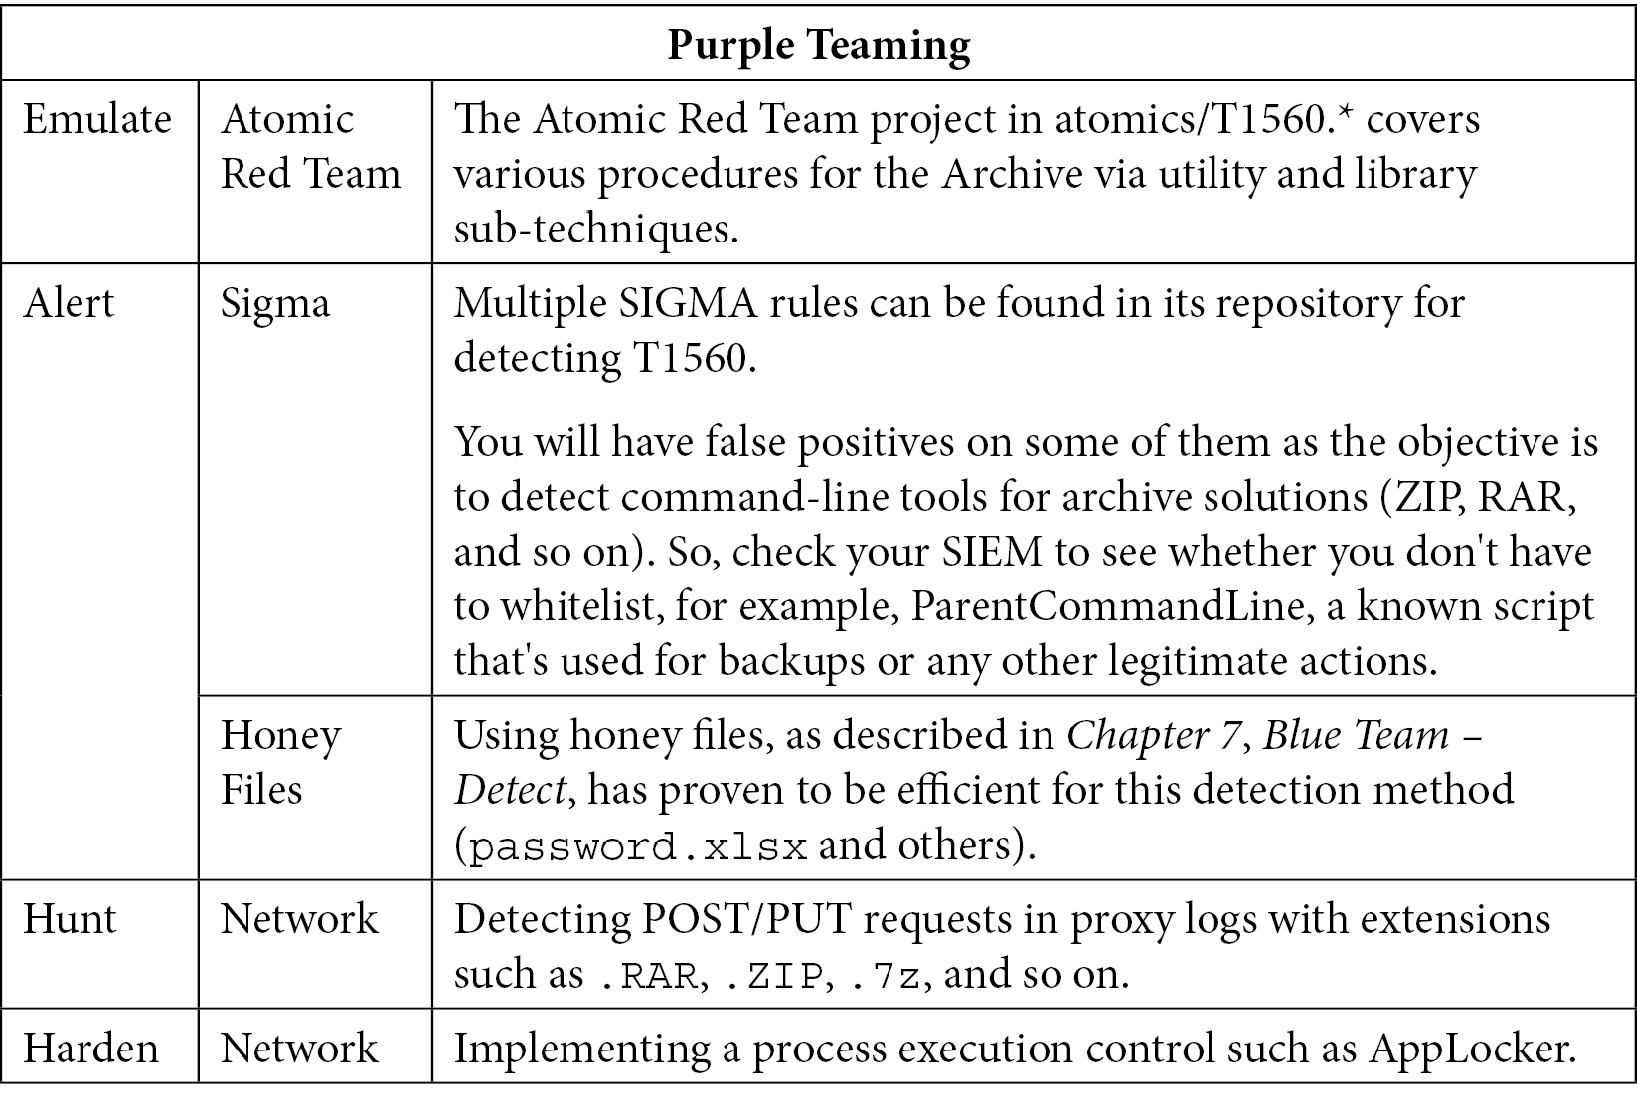 Table 10.17 – Purple Teaming T1560
